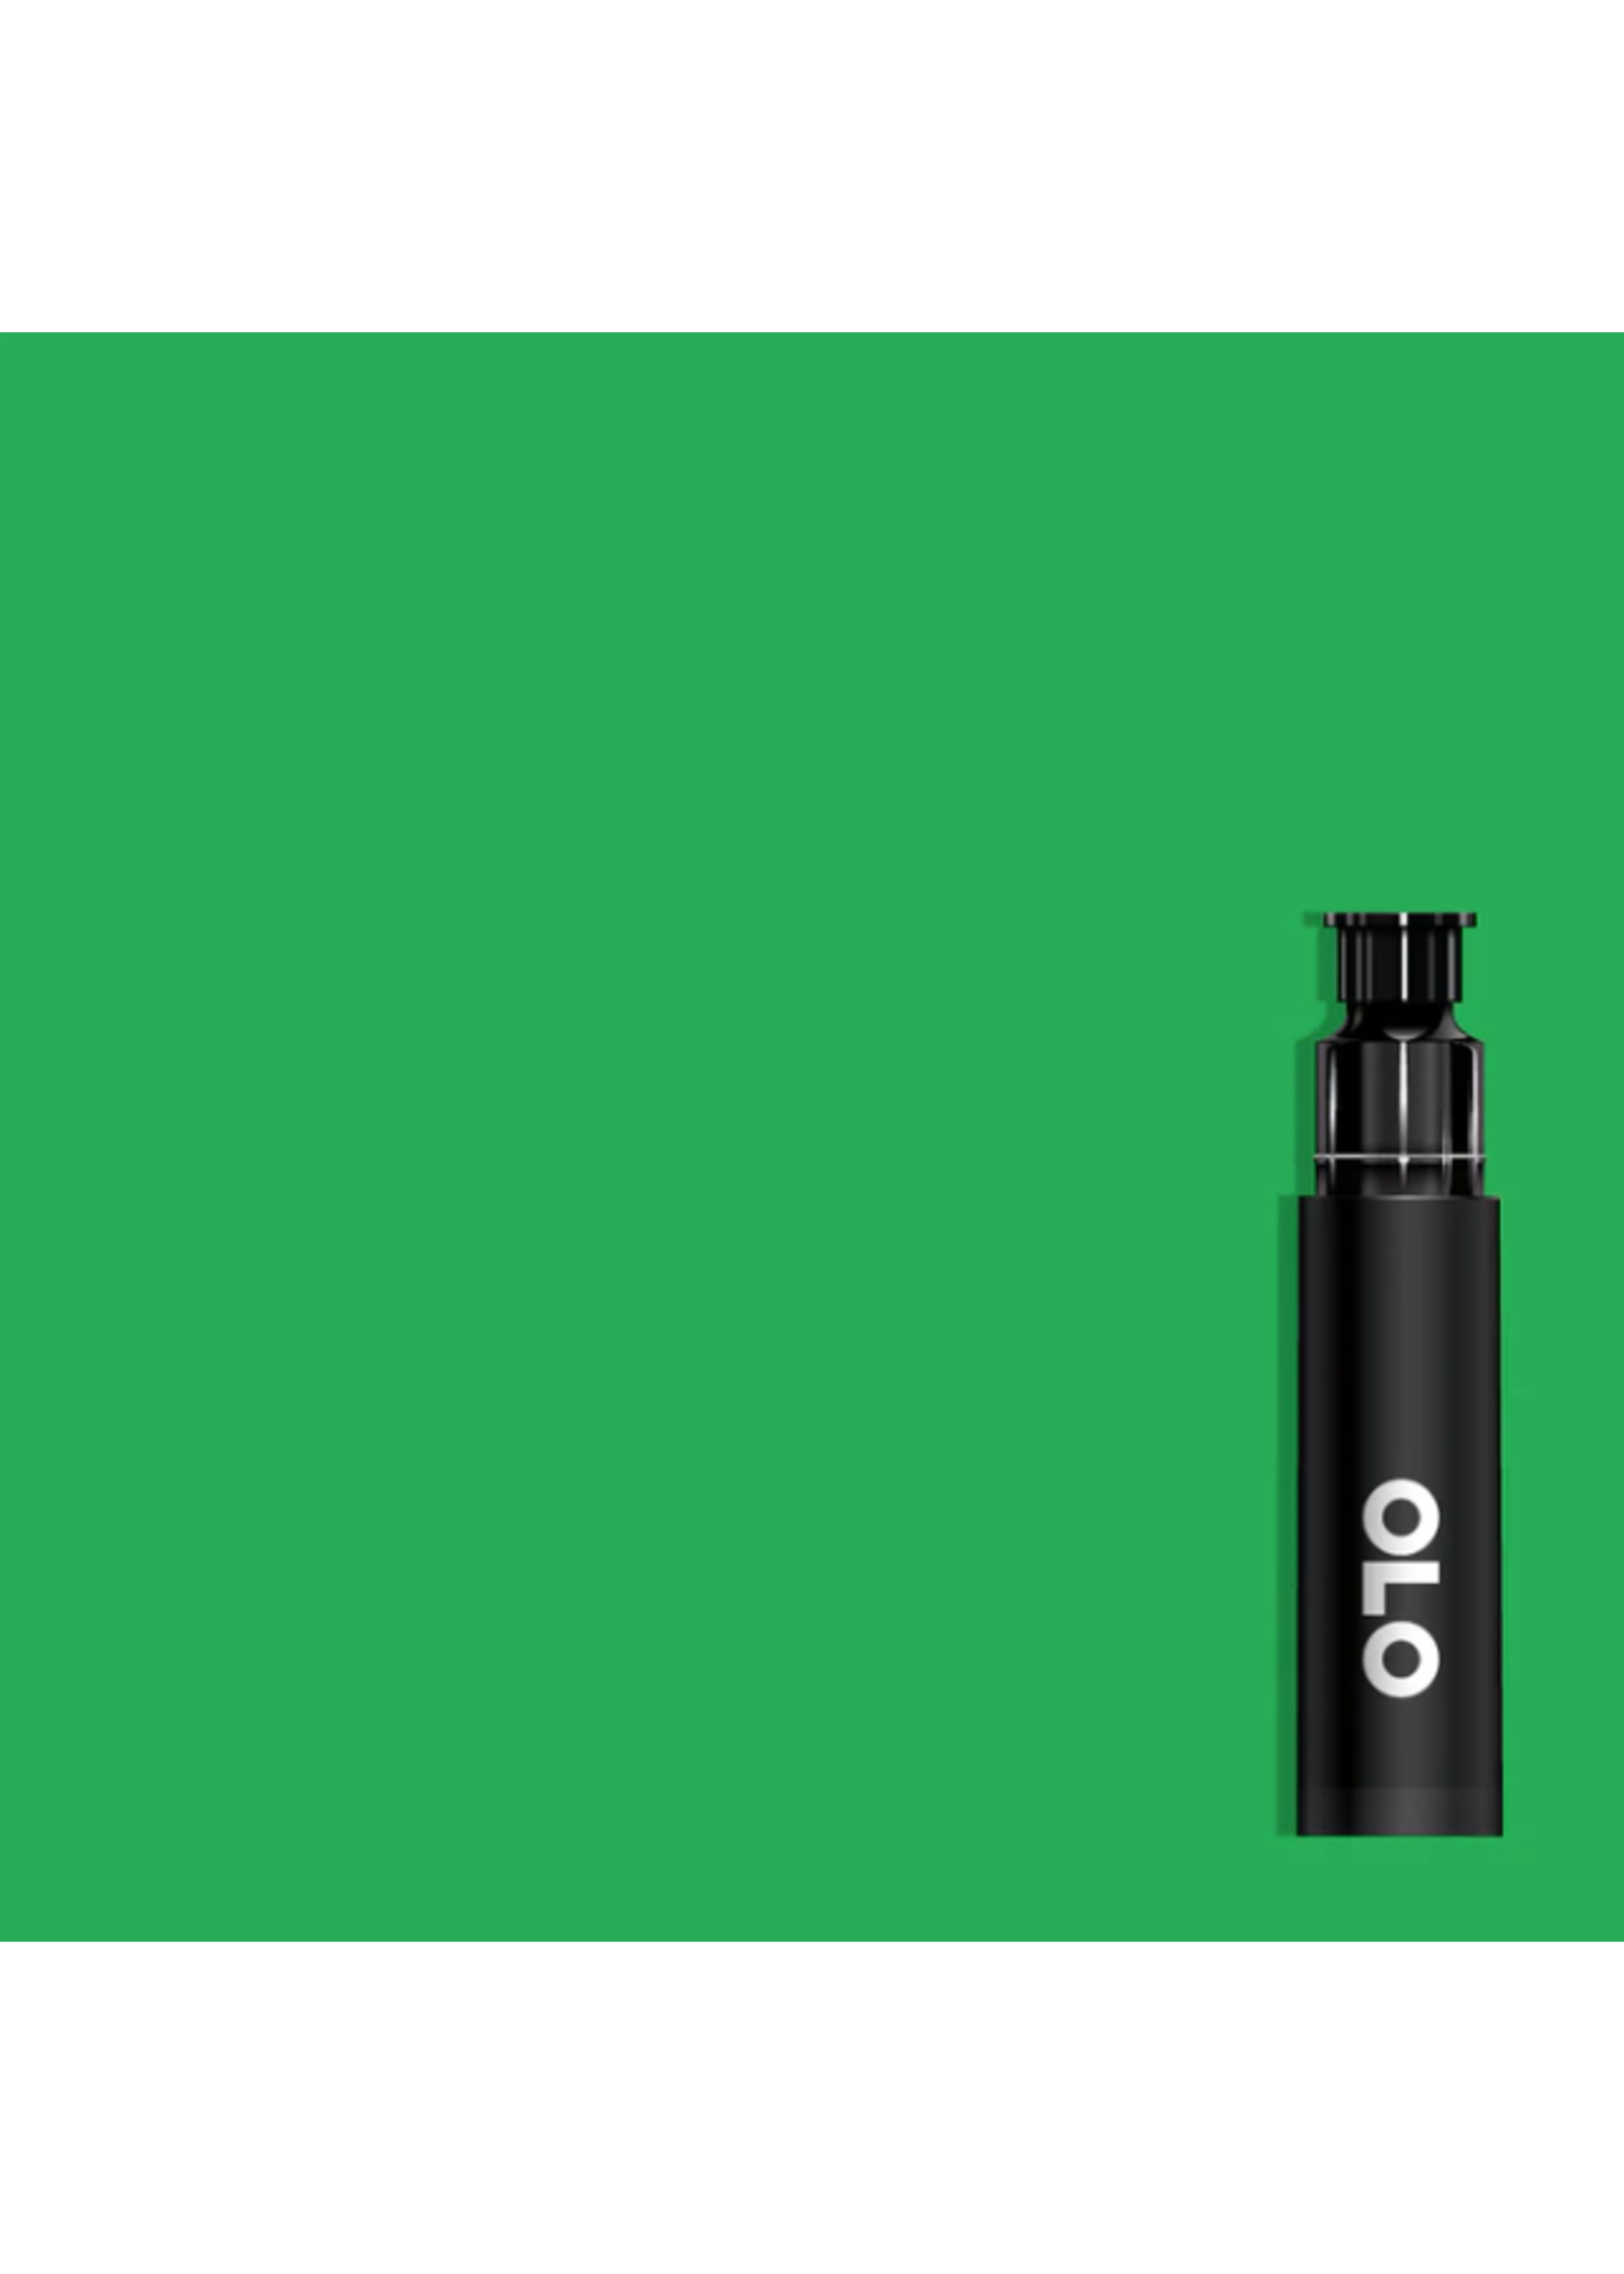 OLO OLO Brush Replacement Cartridge: Jade